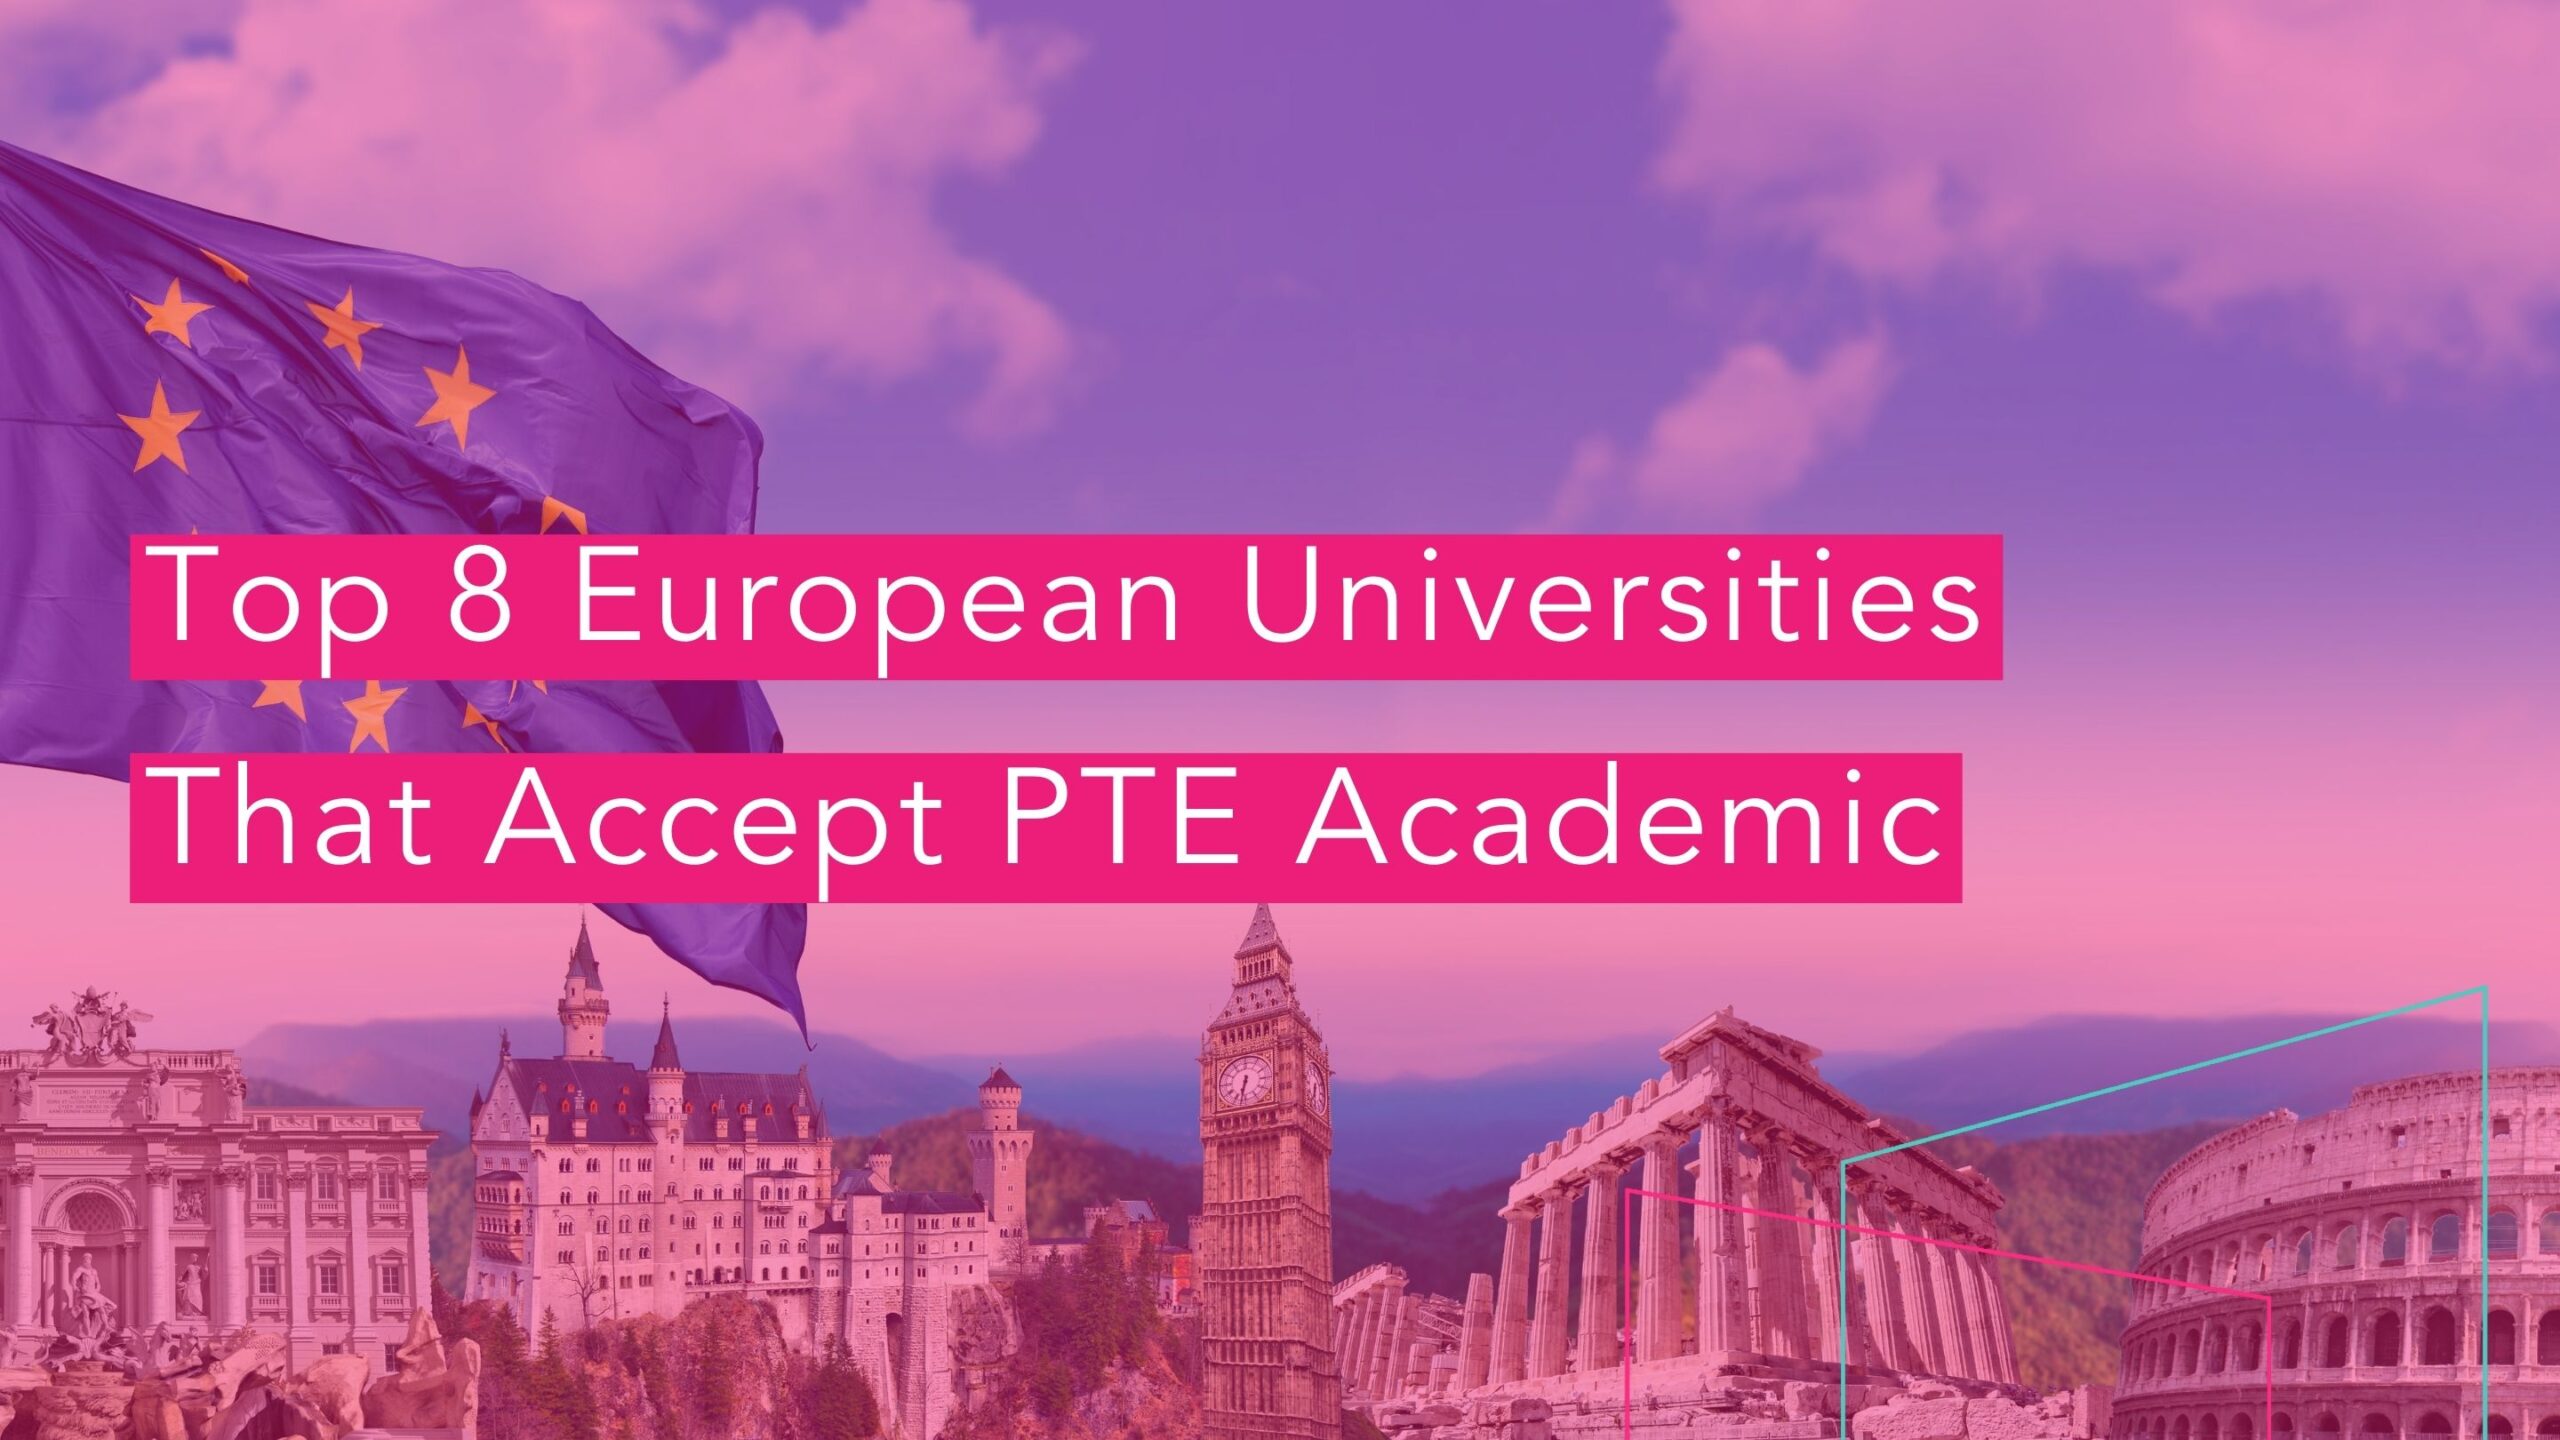 Top 8 European Universities That Accept PTE Academic